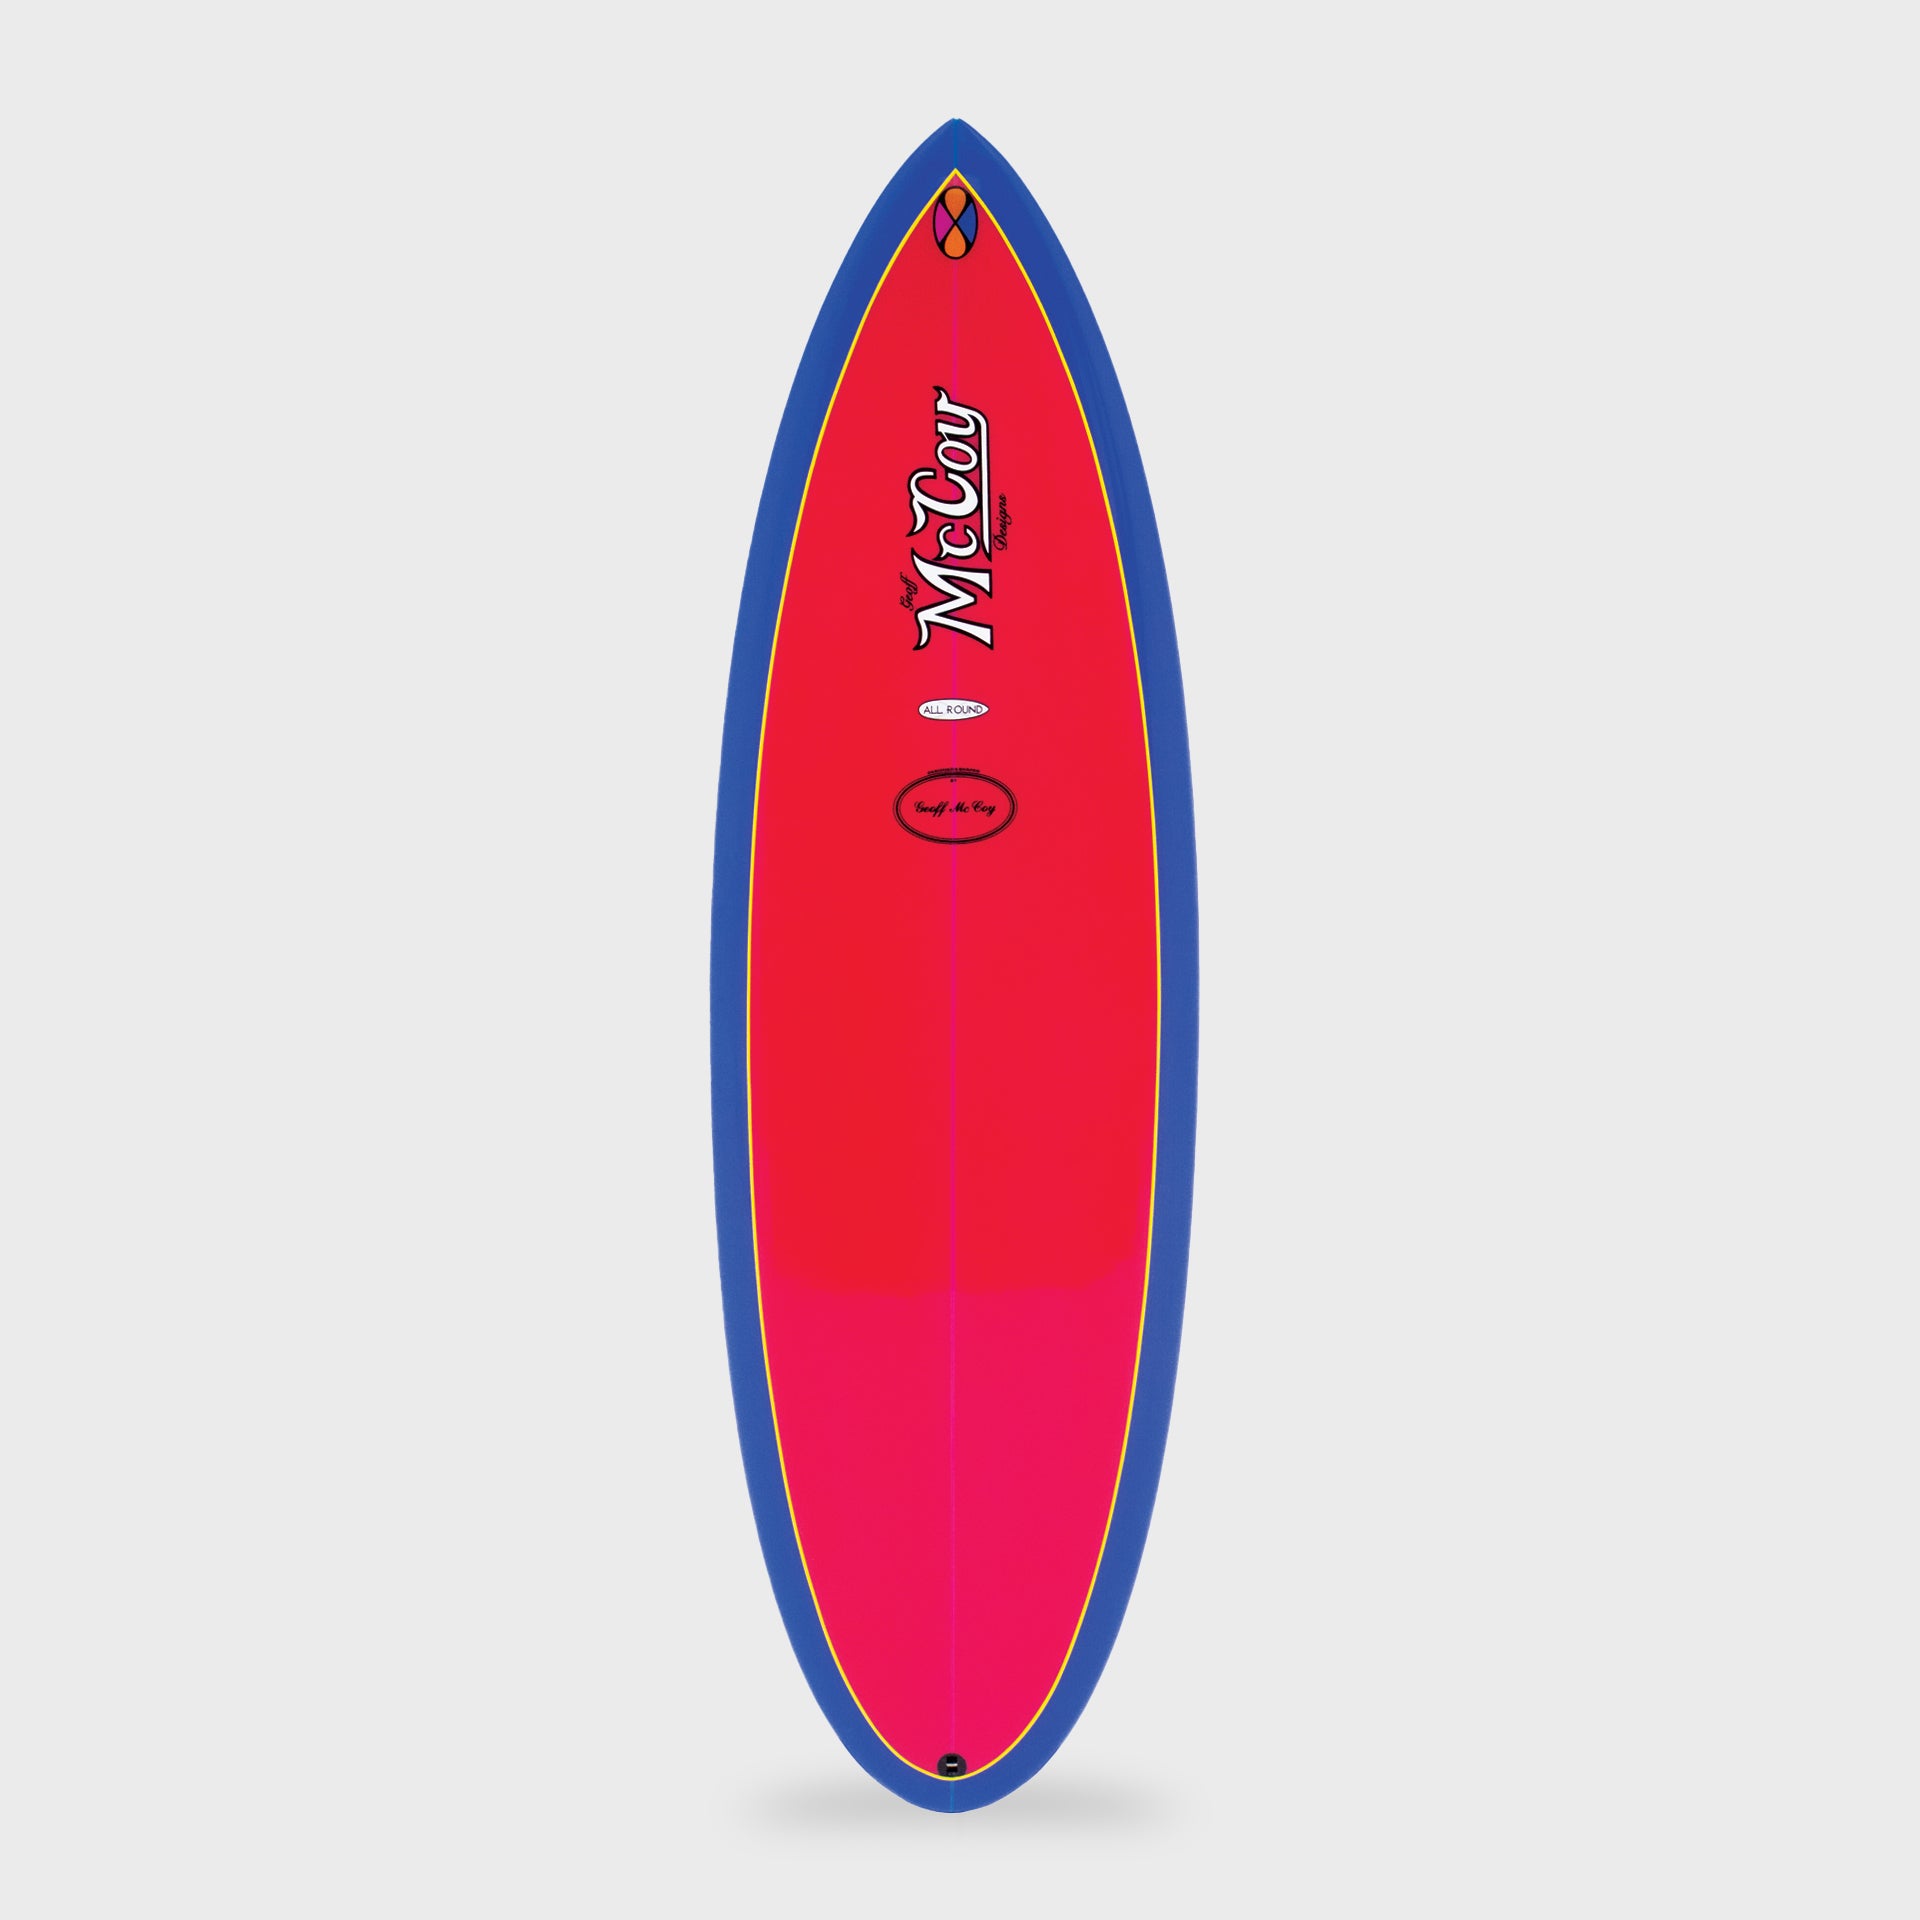 McCoy All Round Nugget 3F FCS II XF Sunset Polish Surfboard - Pink/Blue